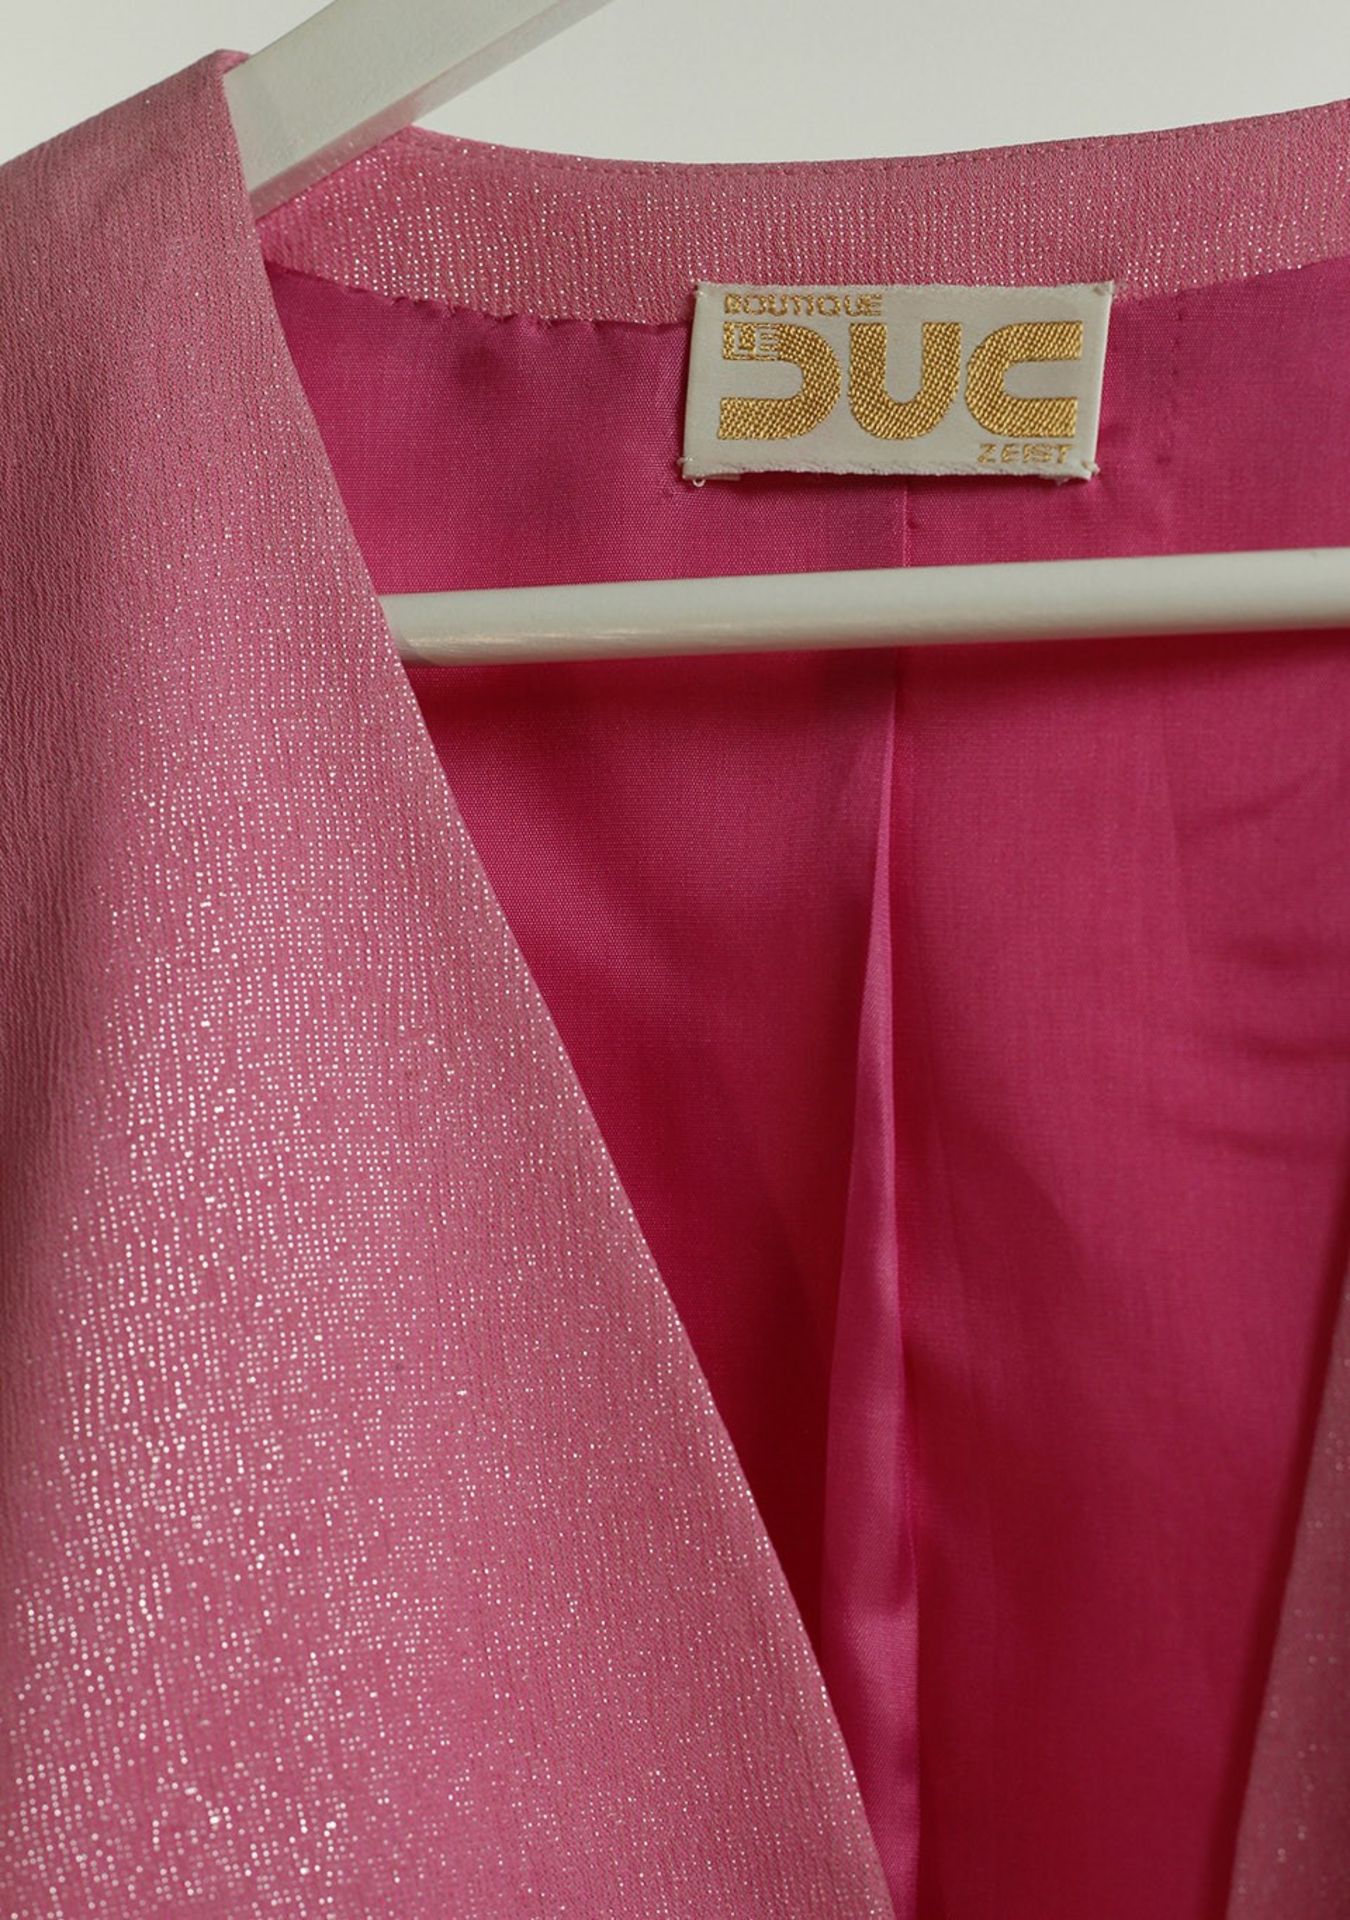 1 x Boutique Le Duc Pink Waistcoat - Size: L - Material: 49% Cotton, 40% Acetate, 11% Poly metal - Image 3 of 7